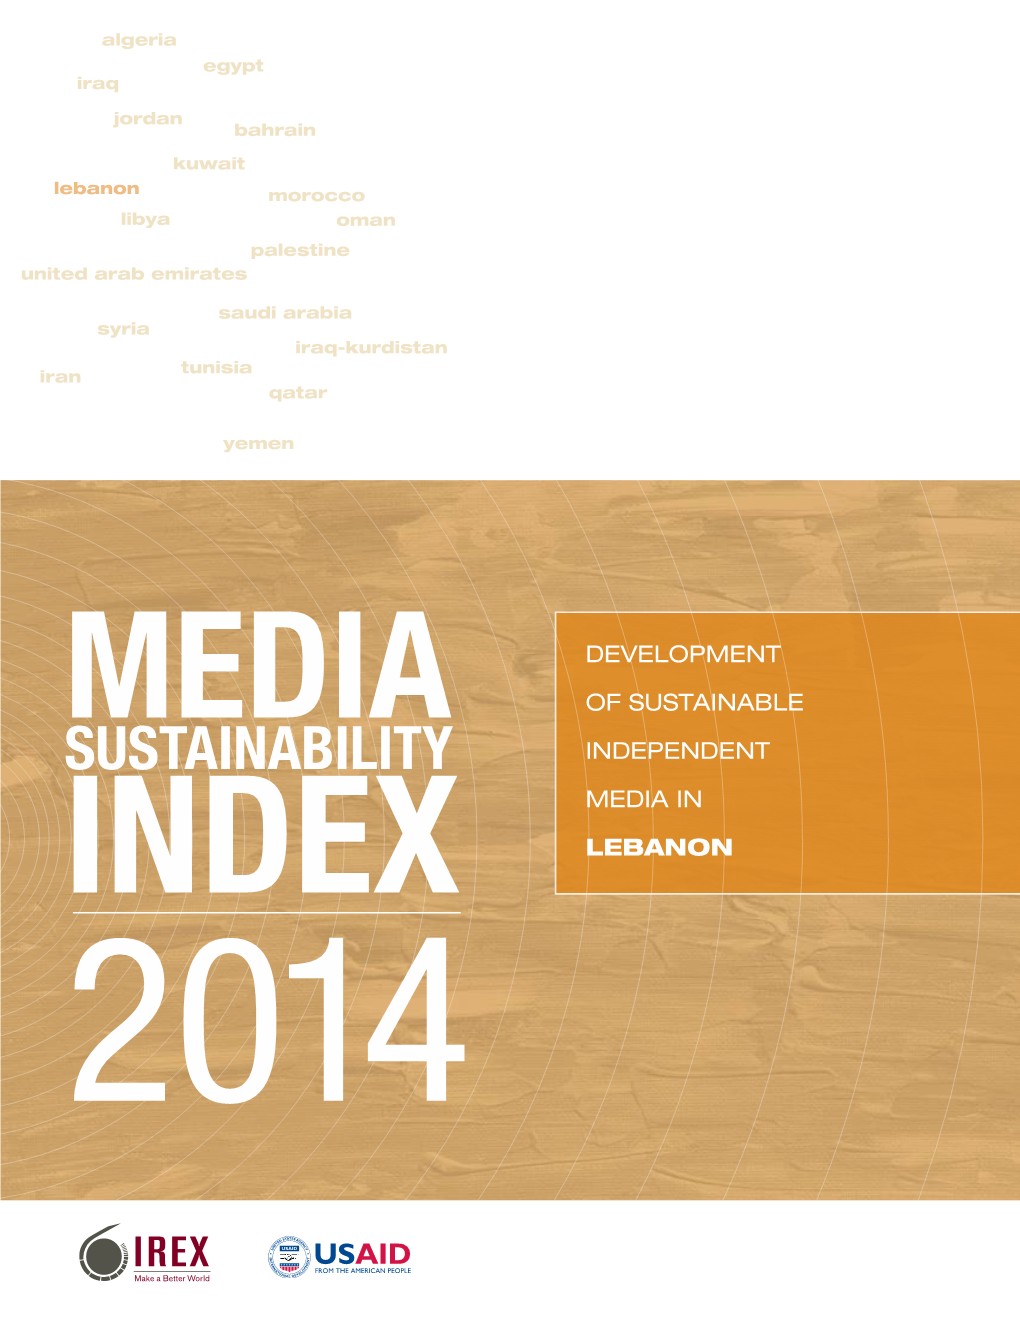 Sustainability Independent Media in Index Lebanon 2014 Media Sustainability Index 2014